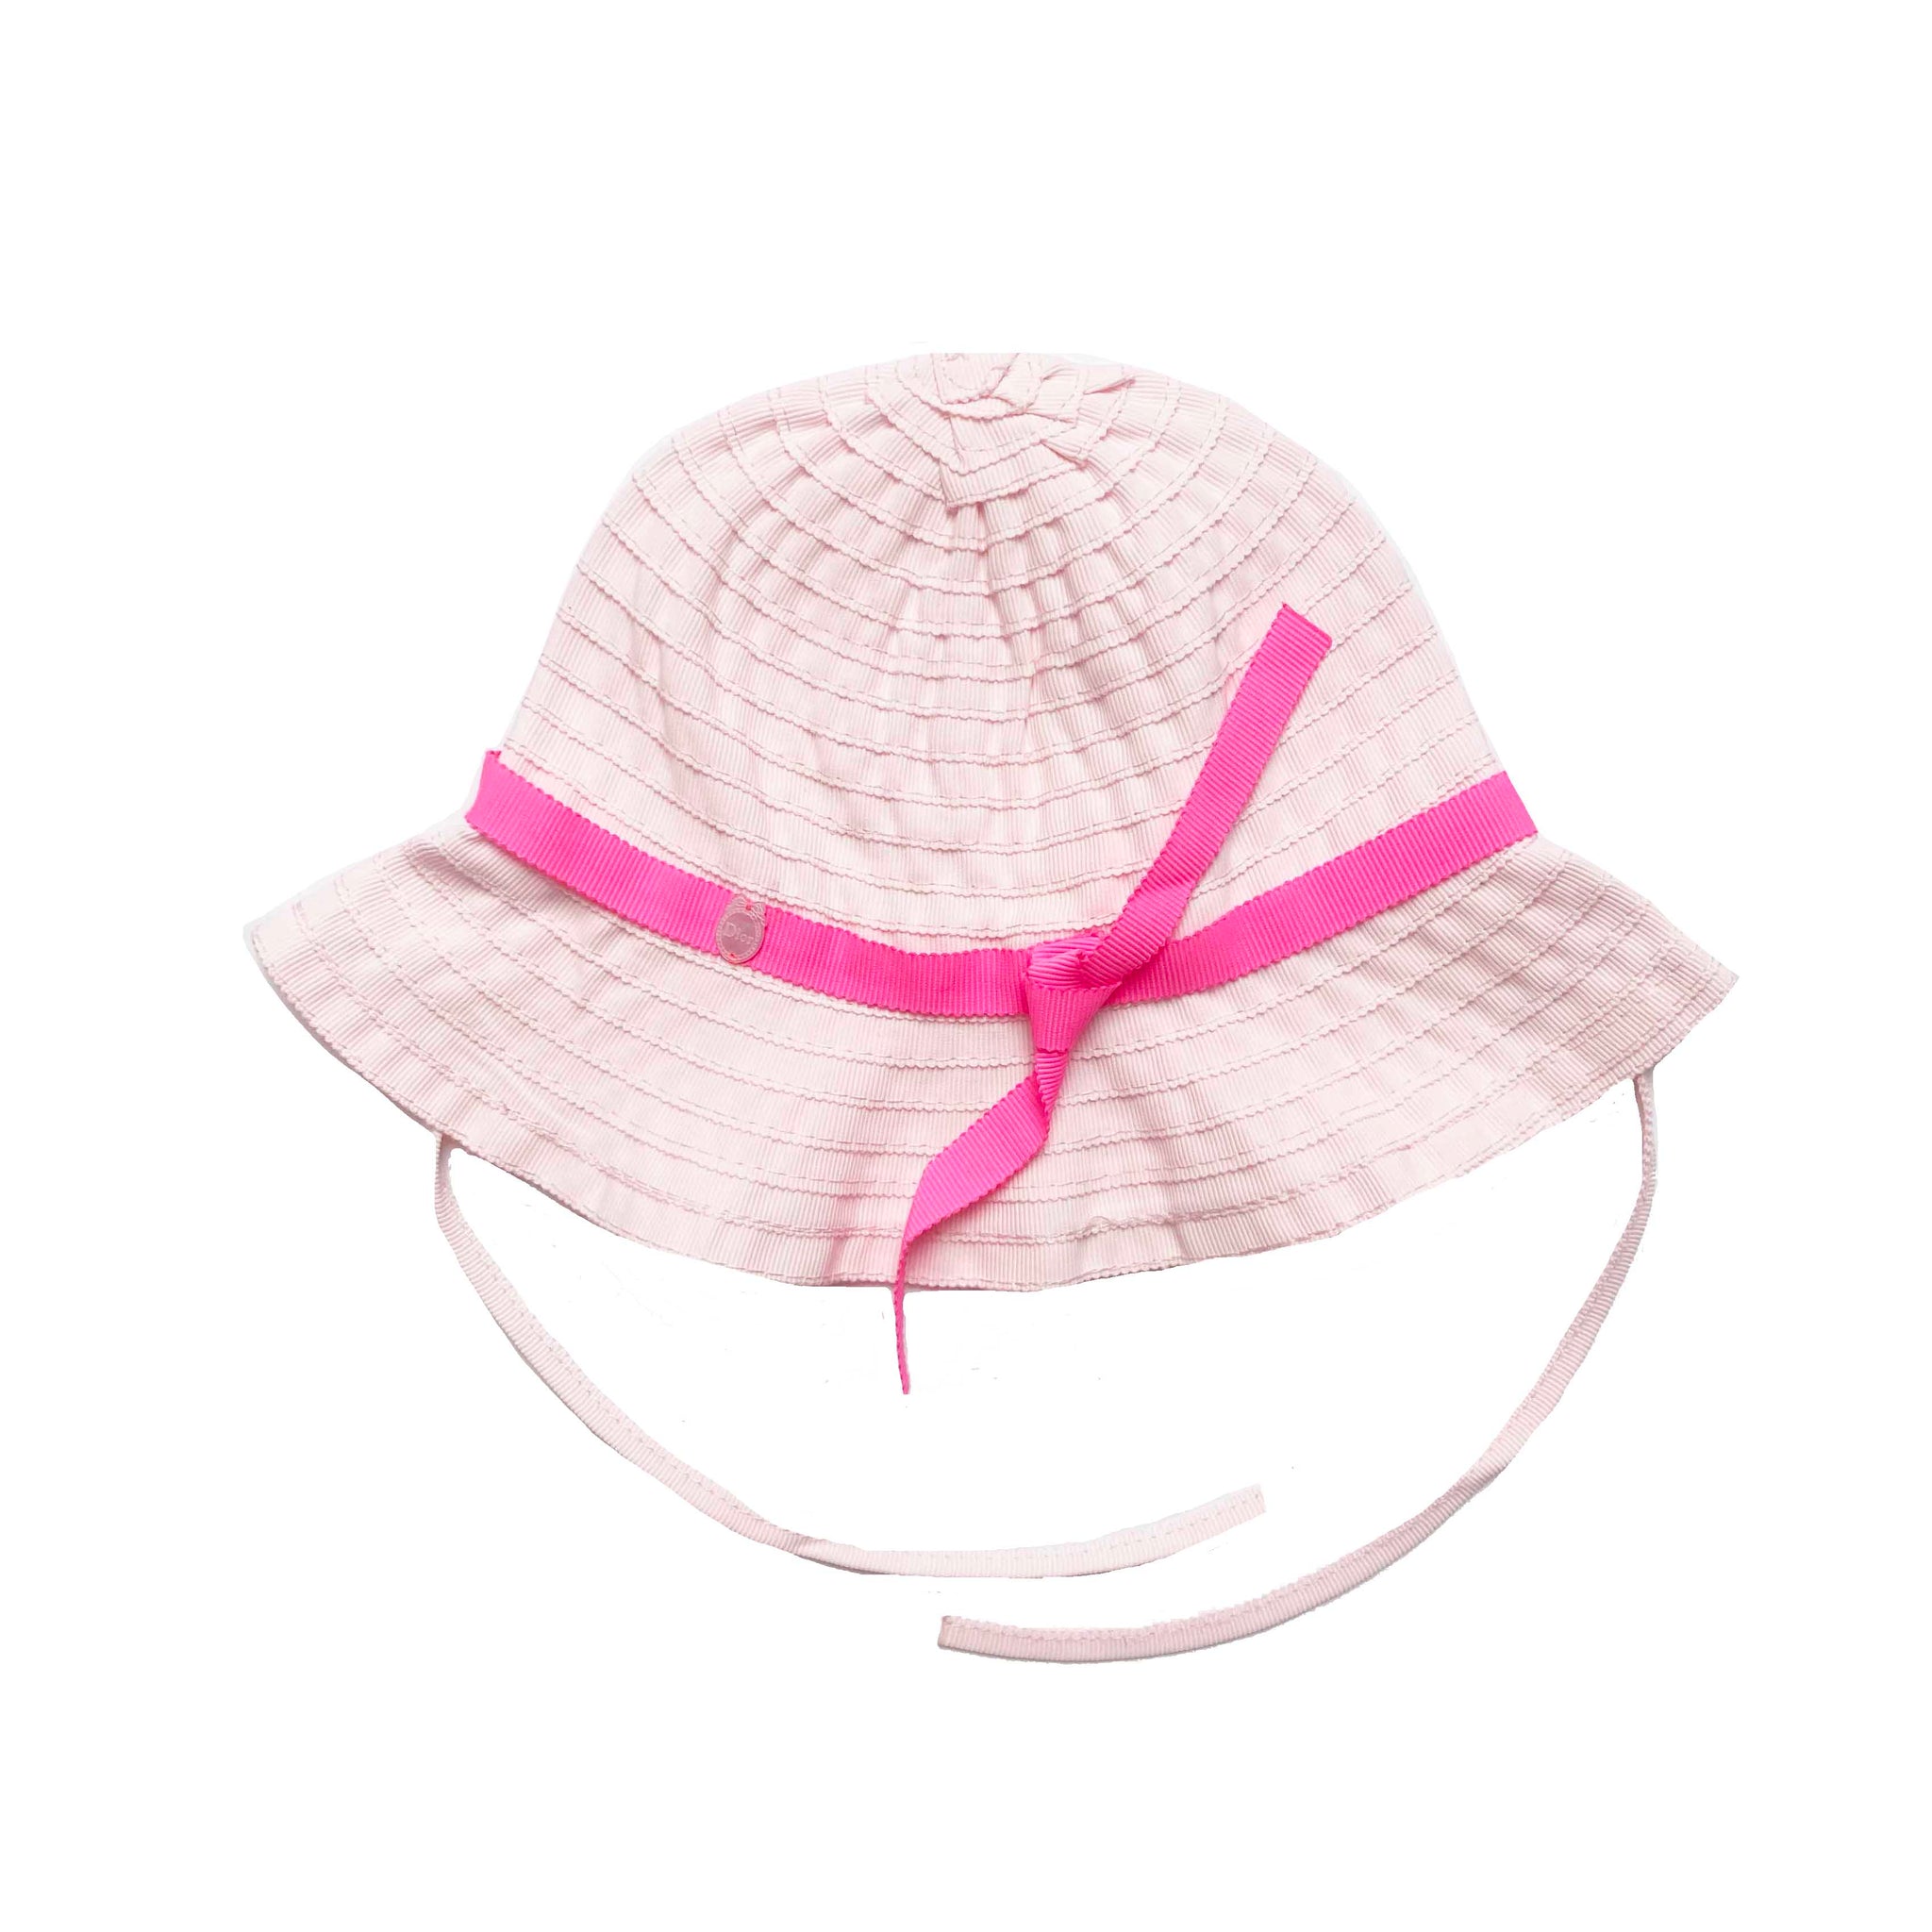 Christian Dior Vintage Trotter Monogram Bucket Hat 58 Polyester Pink  RankAB  eBay